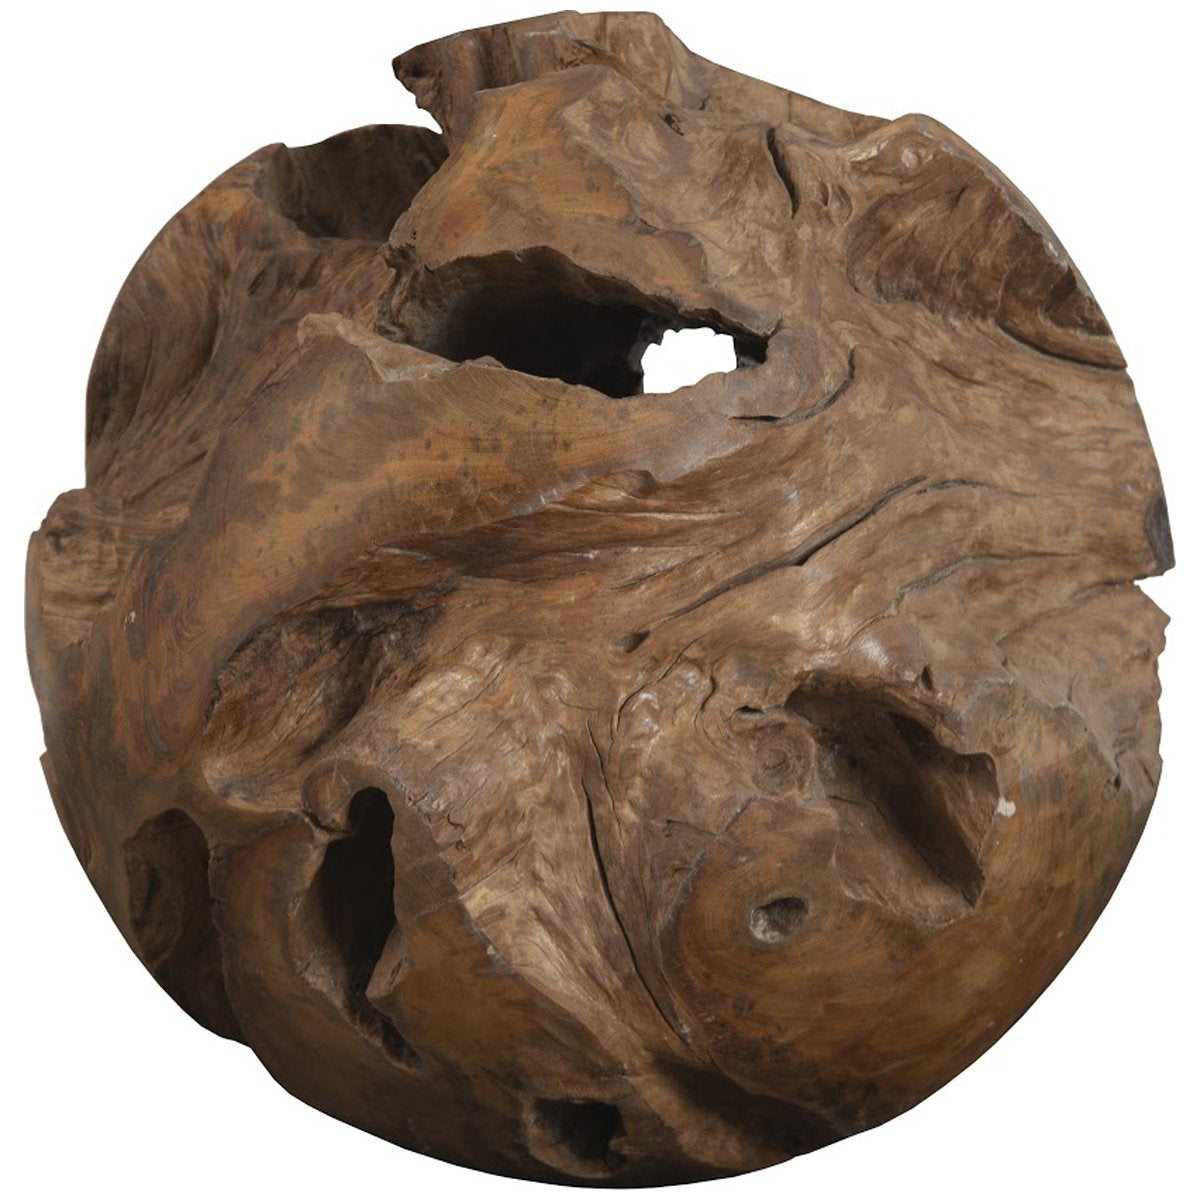 Phillips Collection Teak Wood Ball Sculpture, Large